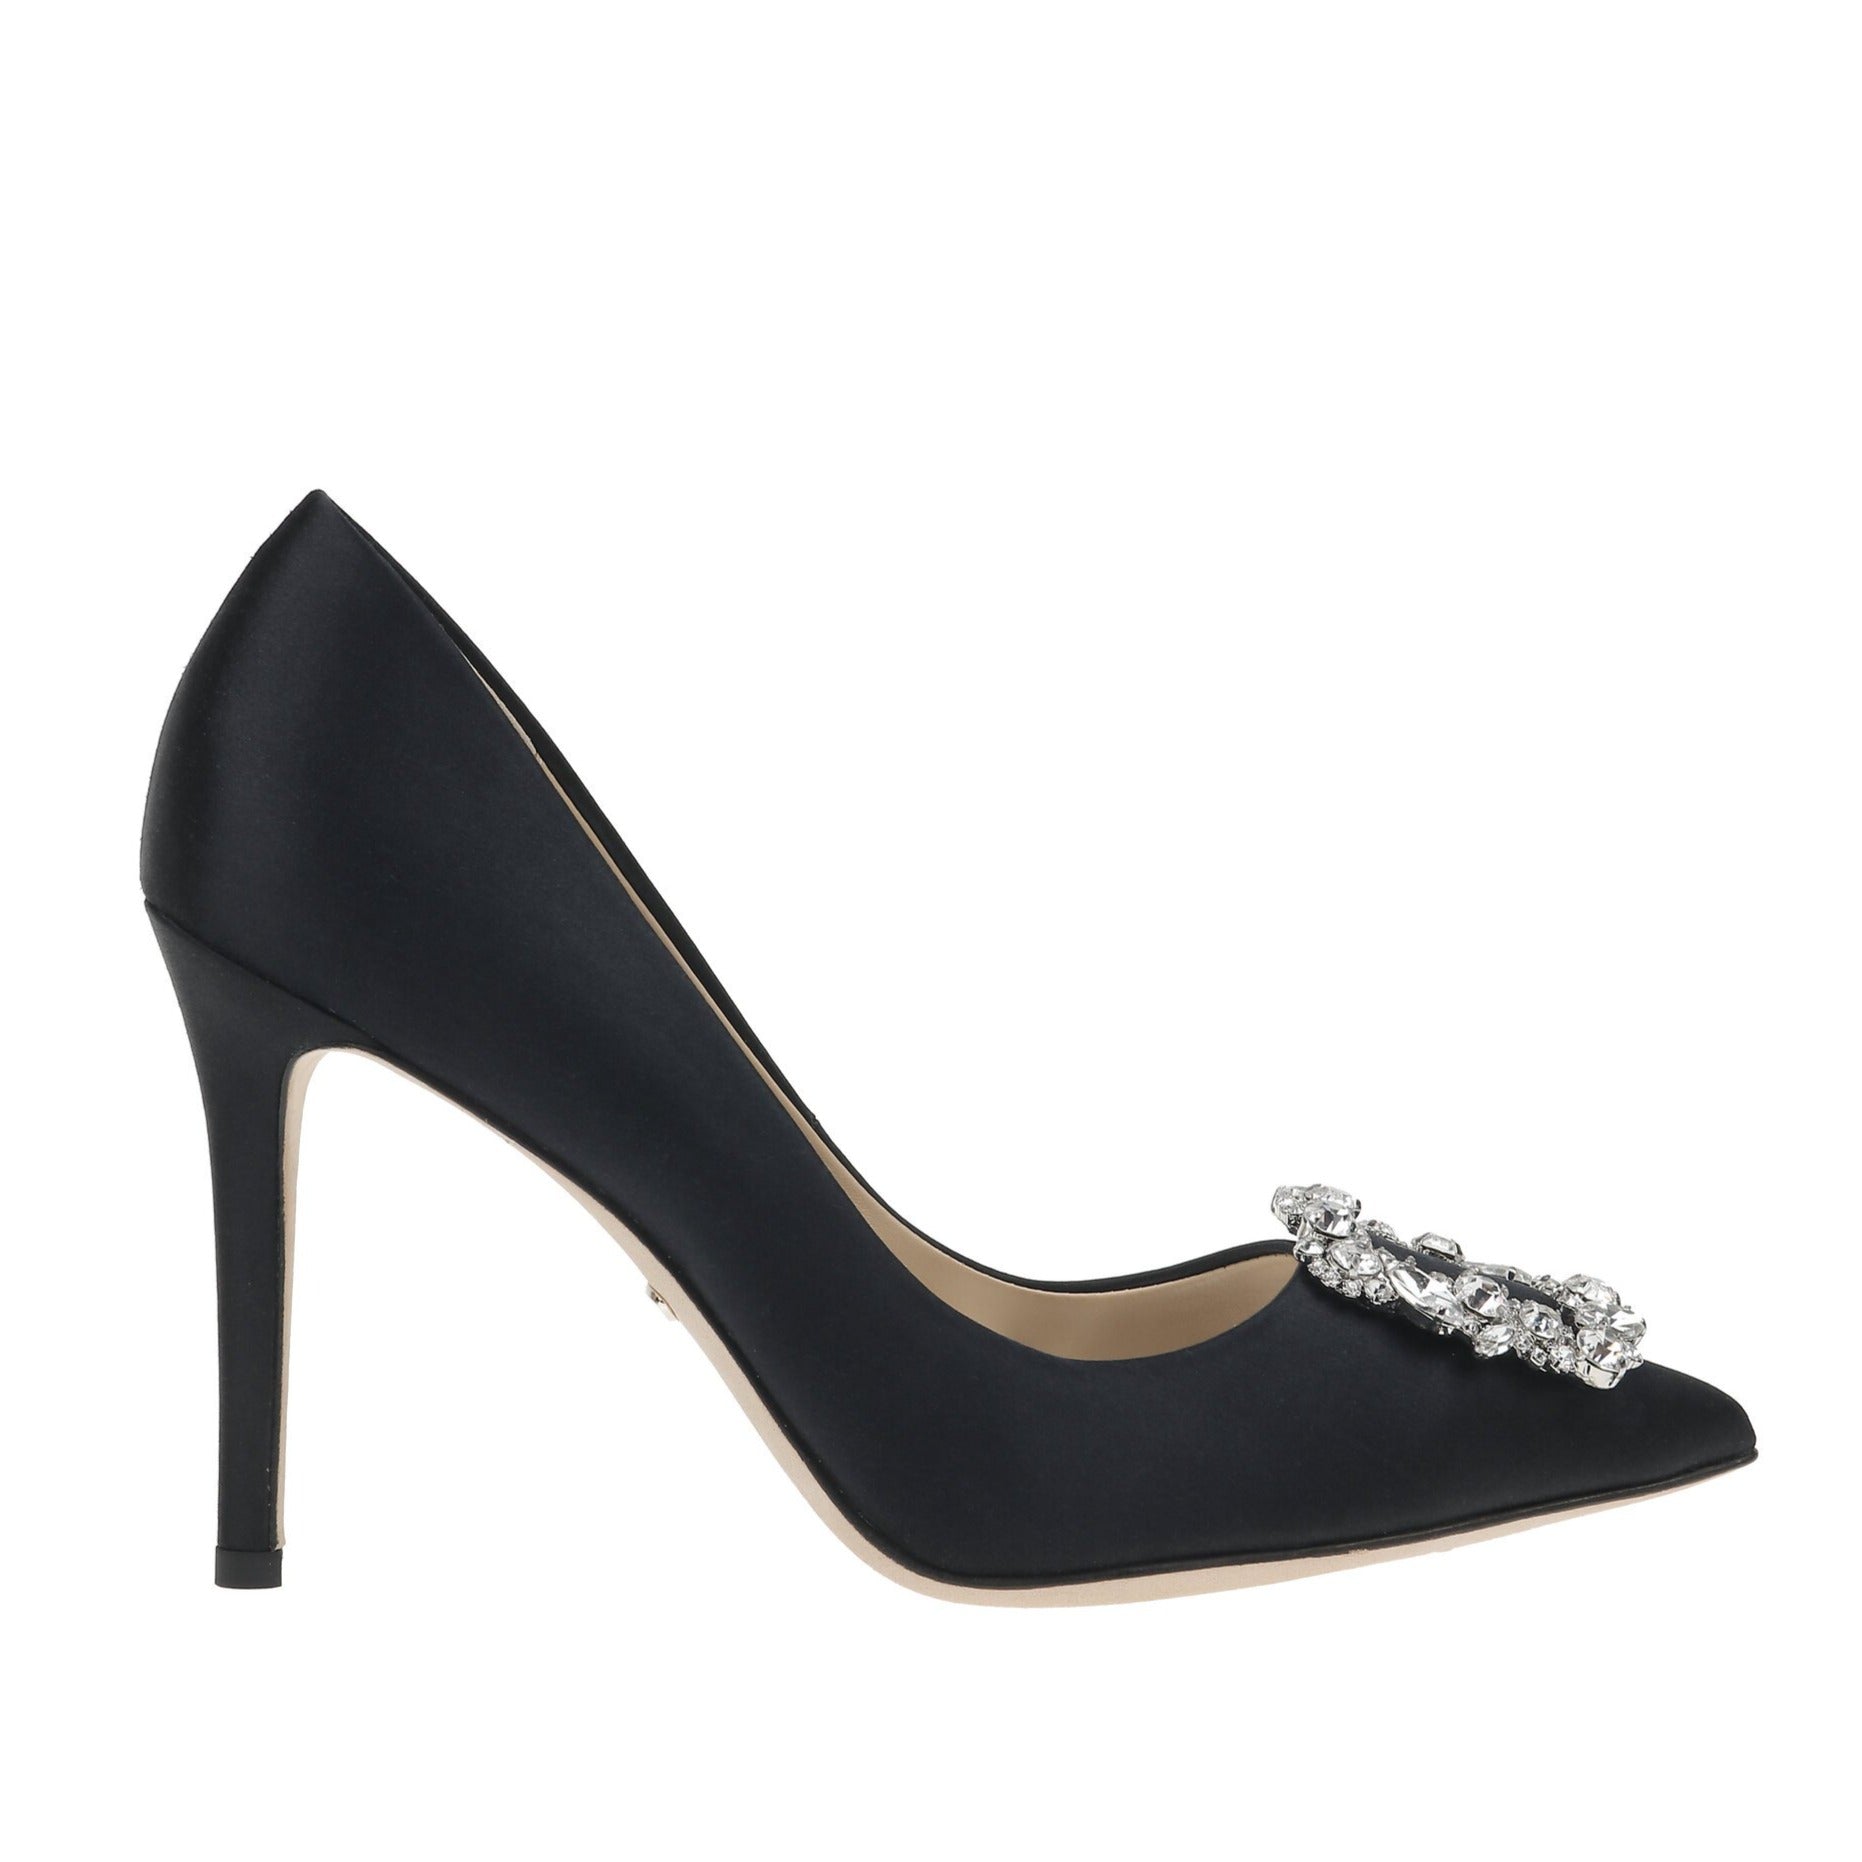 Badgley Mischka Cher Buckle Pointed Wedding Shoes - Black